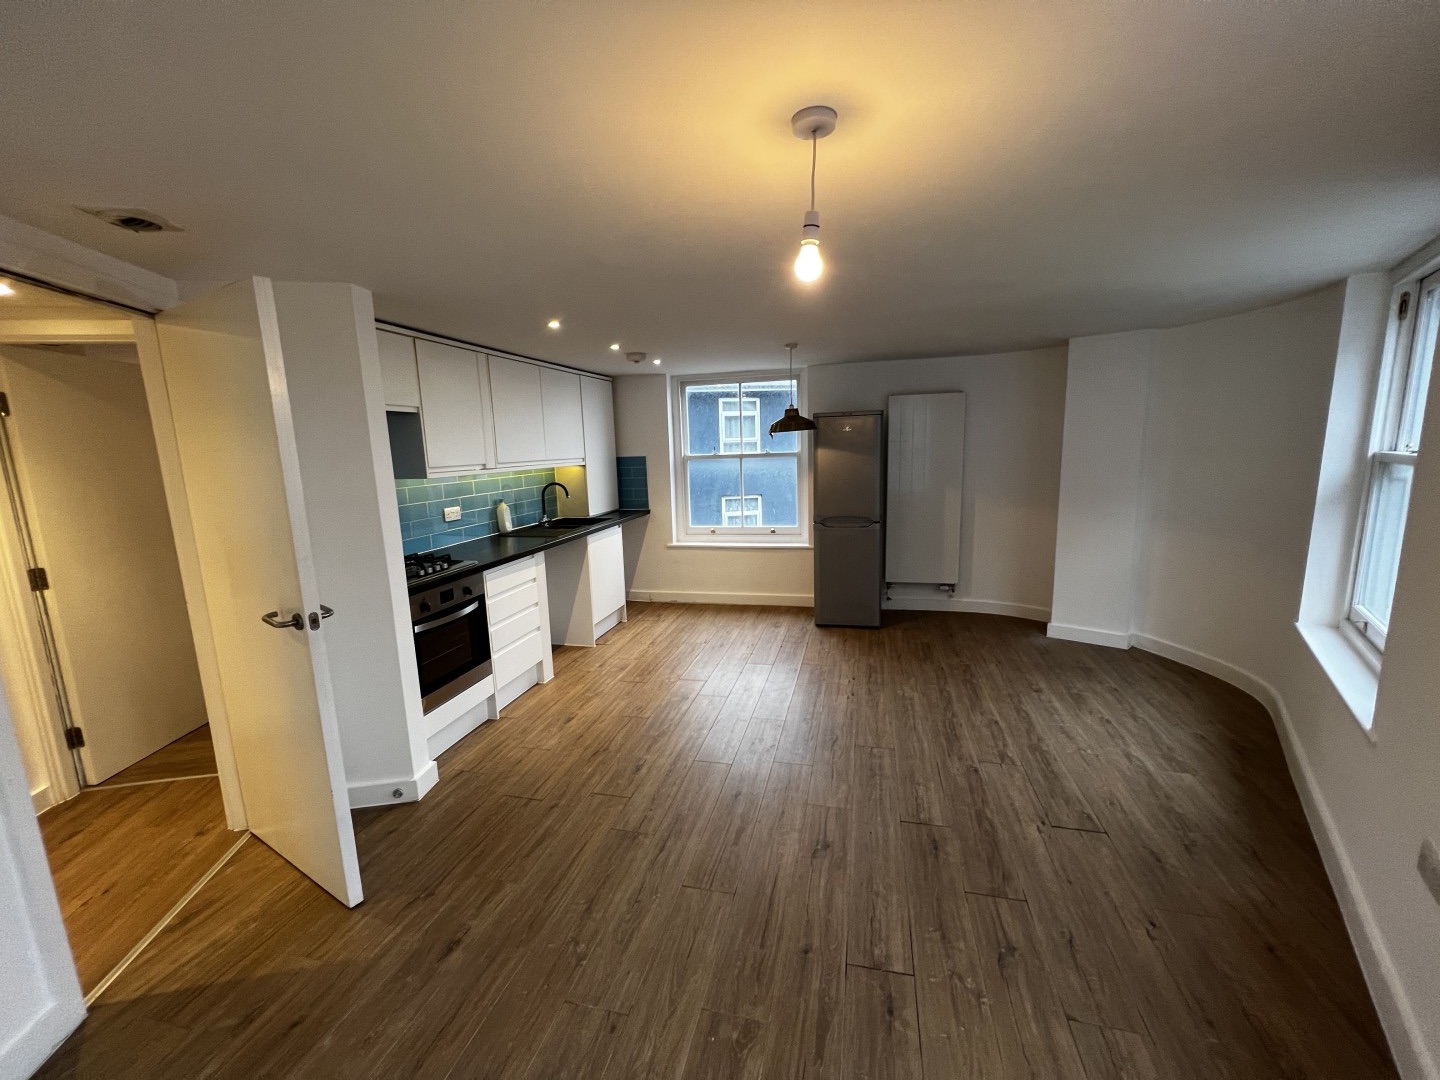 Open plan kitchen/living space